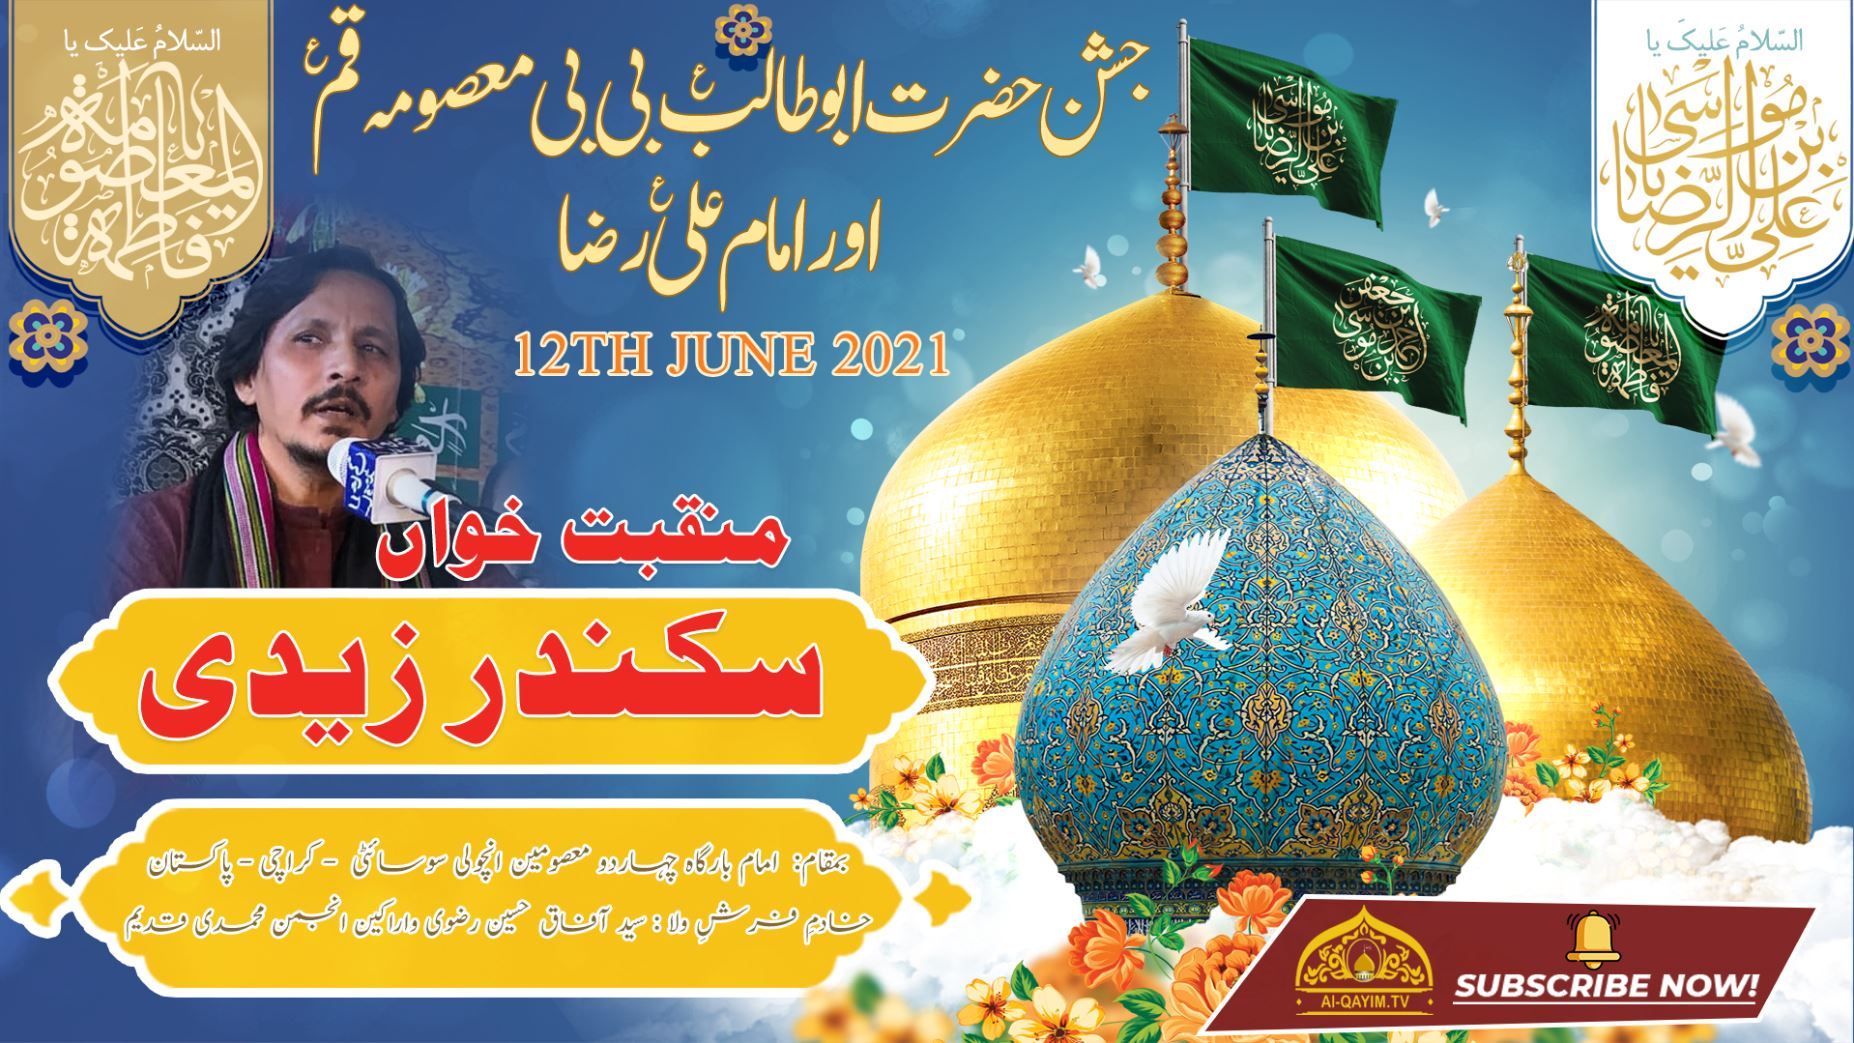 Manqabat | Sikandar Zaidi | Jashan Bibi Masooma & Imam Ali Raza - 12 June 2021 - Ancholi - Karachi